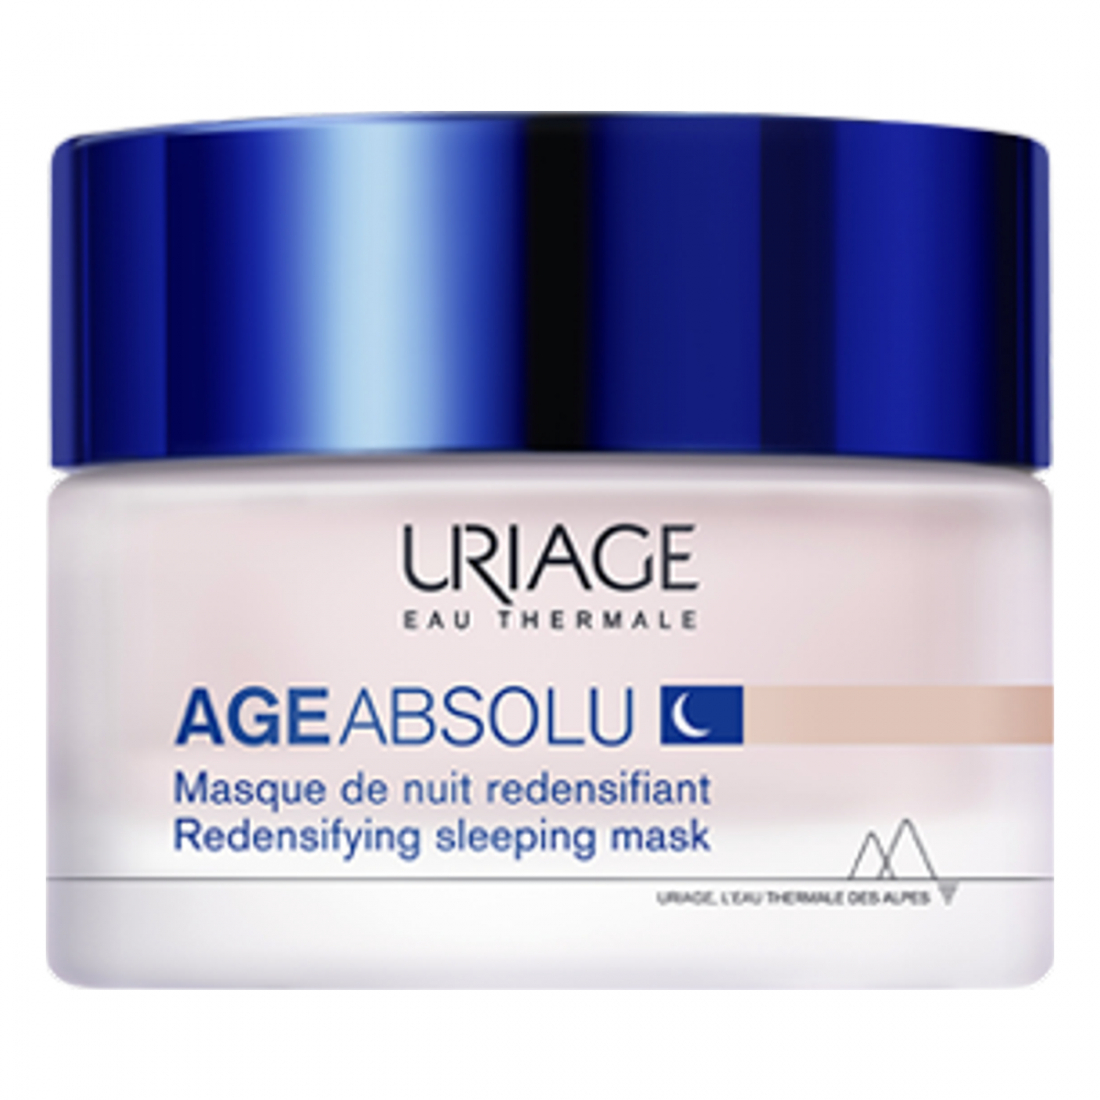 'Age Absolu' Masque De Nuit Redensifiant - 50 ml